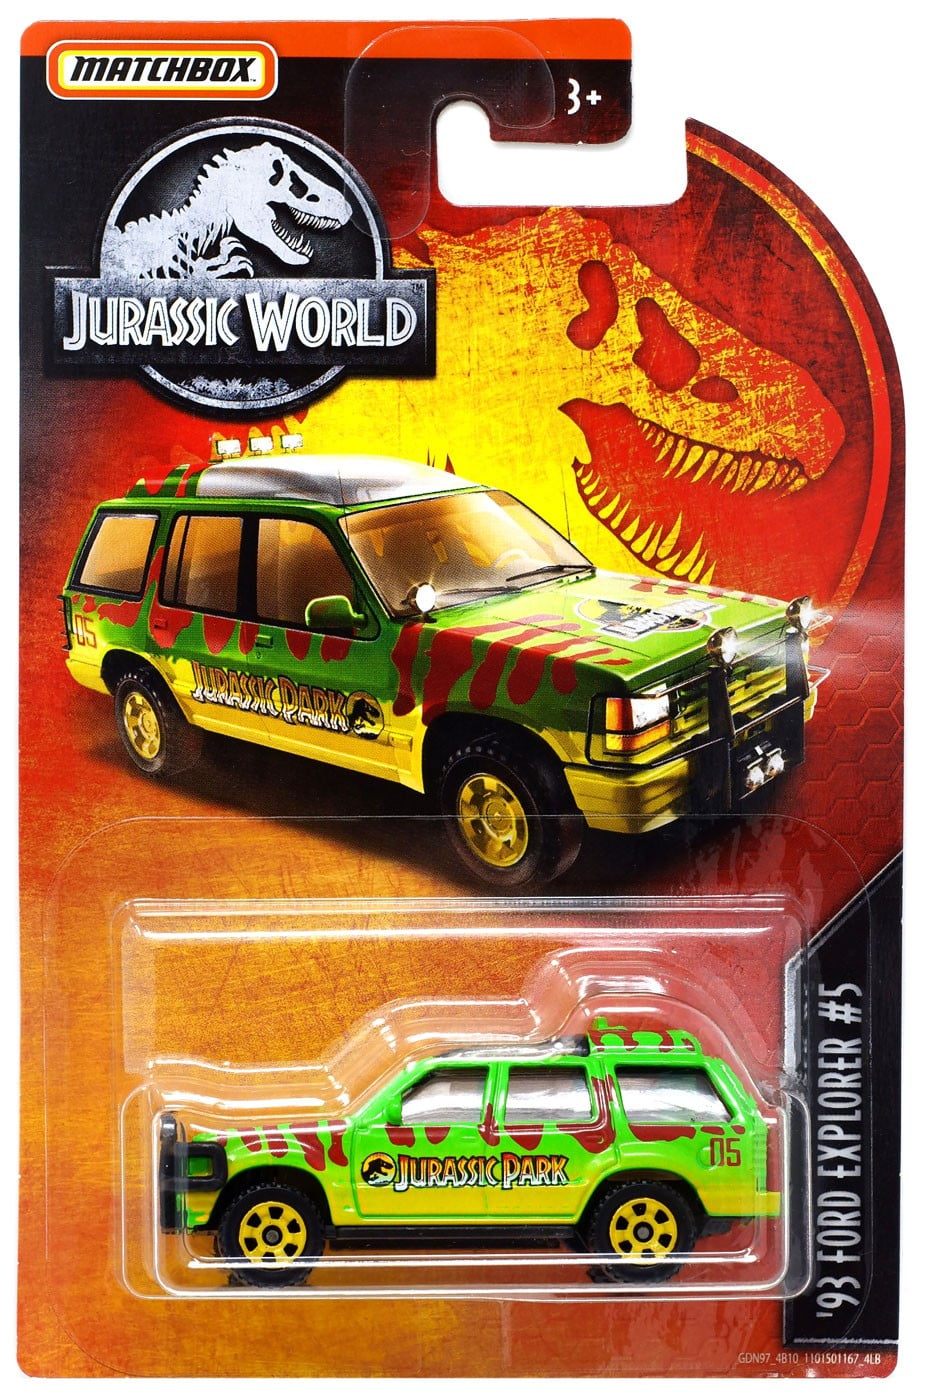 Matchbox Jurassic World 1.64 Vehicle Collection Car Model Travel Tracker Boy Toy 